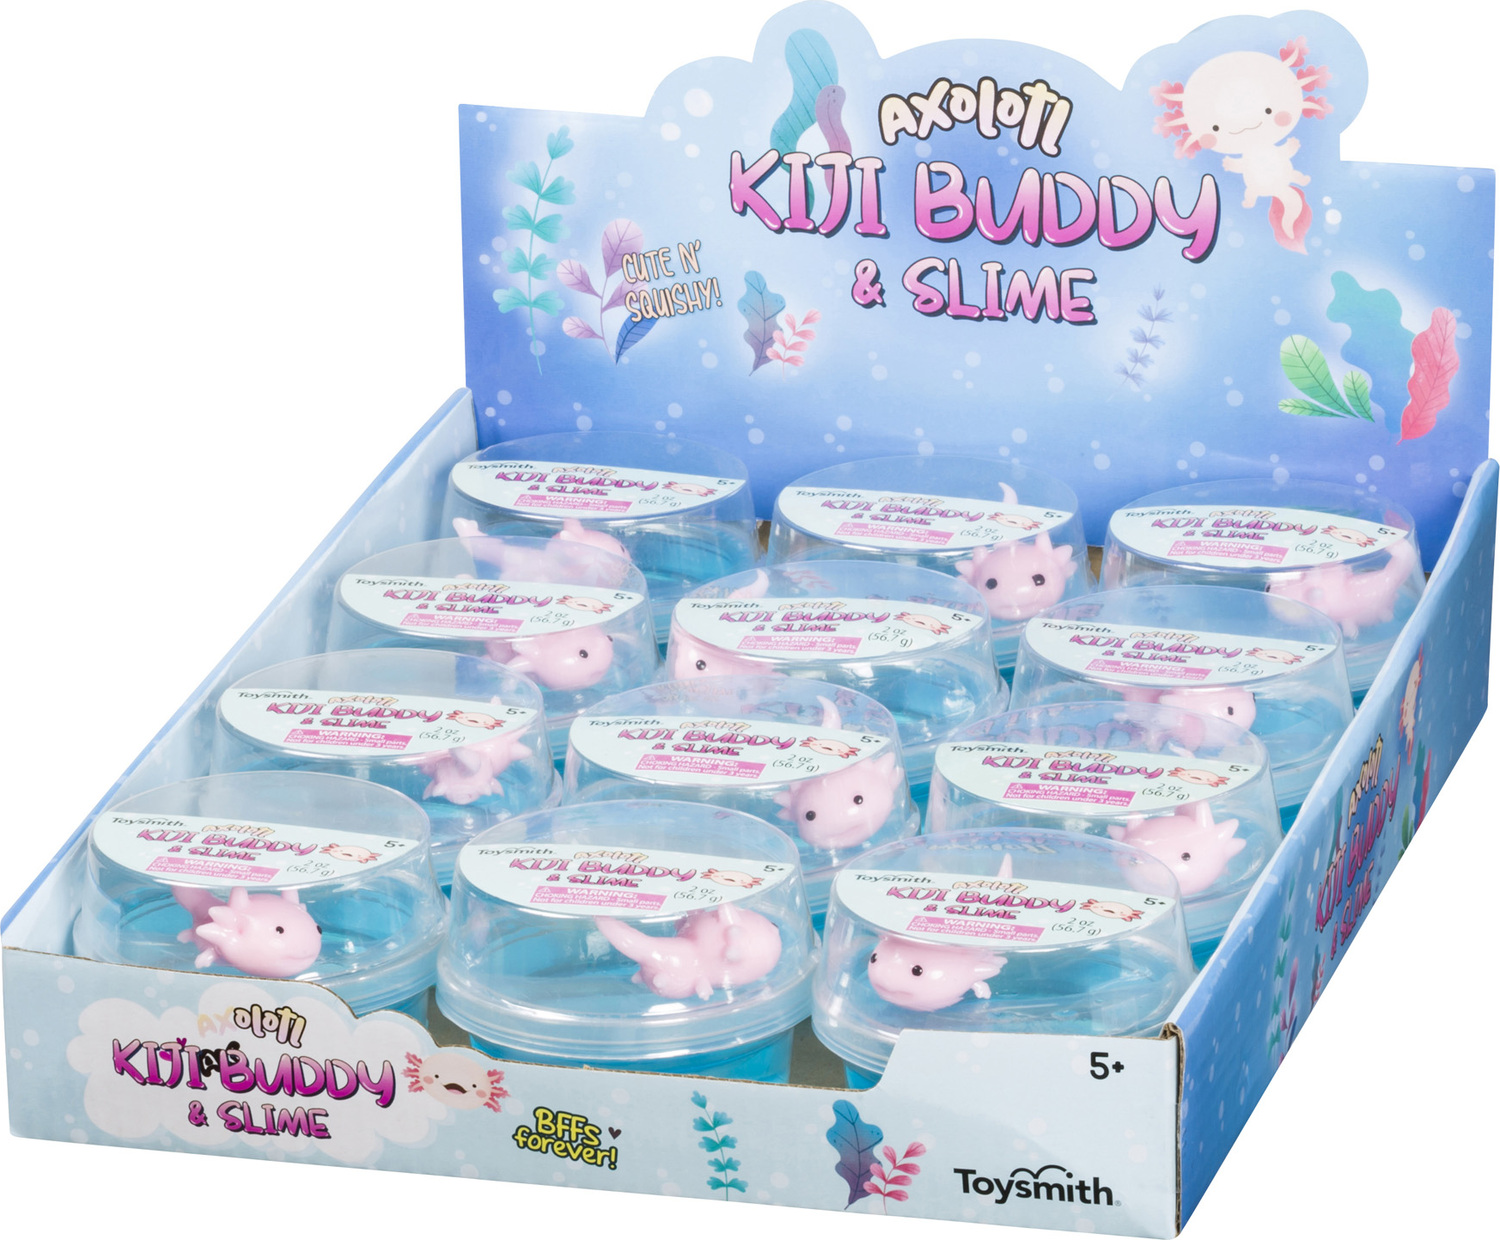 Kiji Buddy Axolotl slime - Teaching Toys and Books